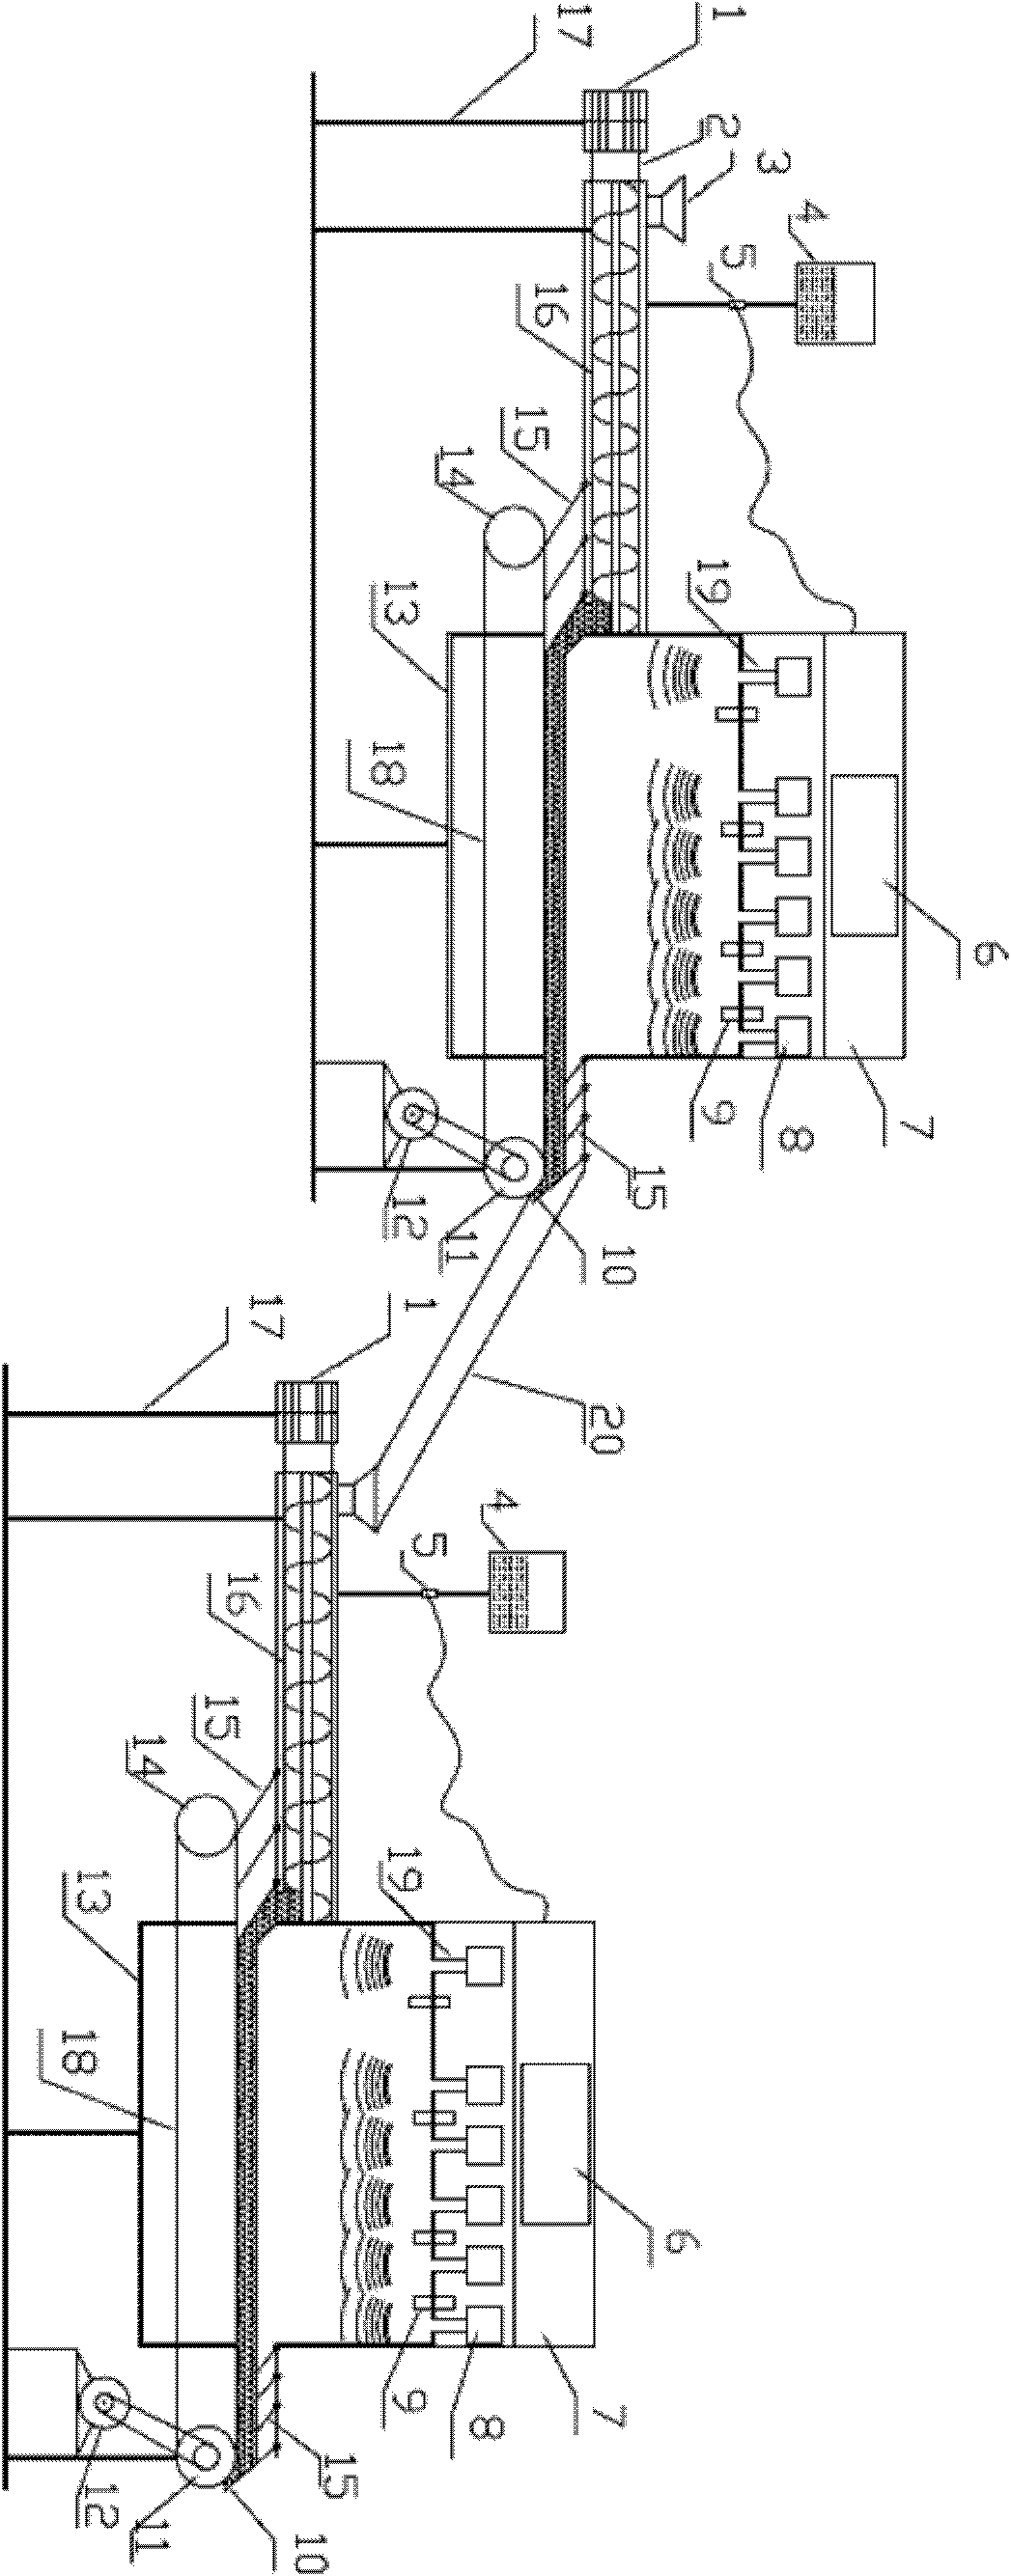 Module coupling biomass microwave dry or semidry pretreatment reactor